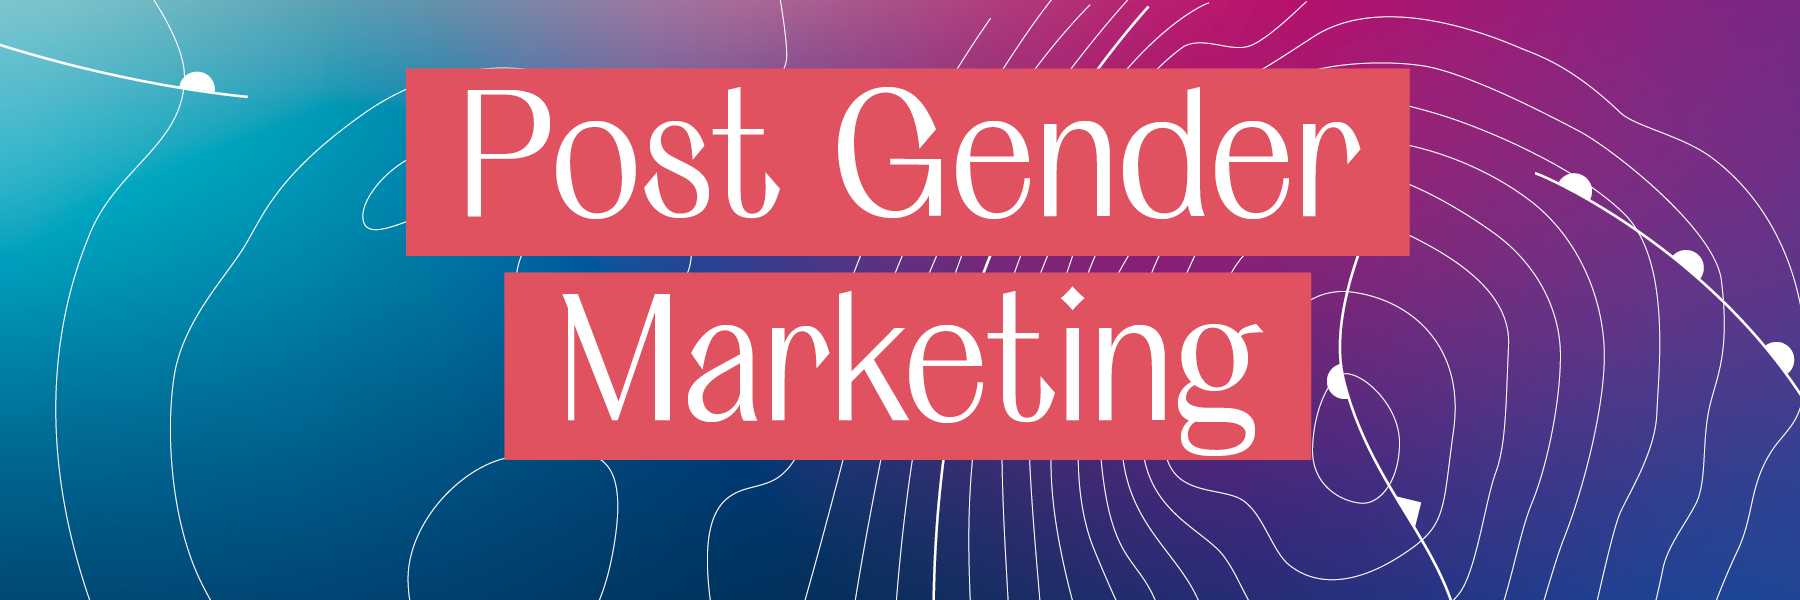 FES Gender Glossar - Post Gender Marketing